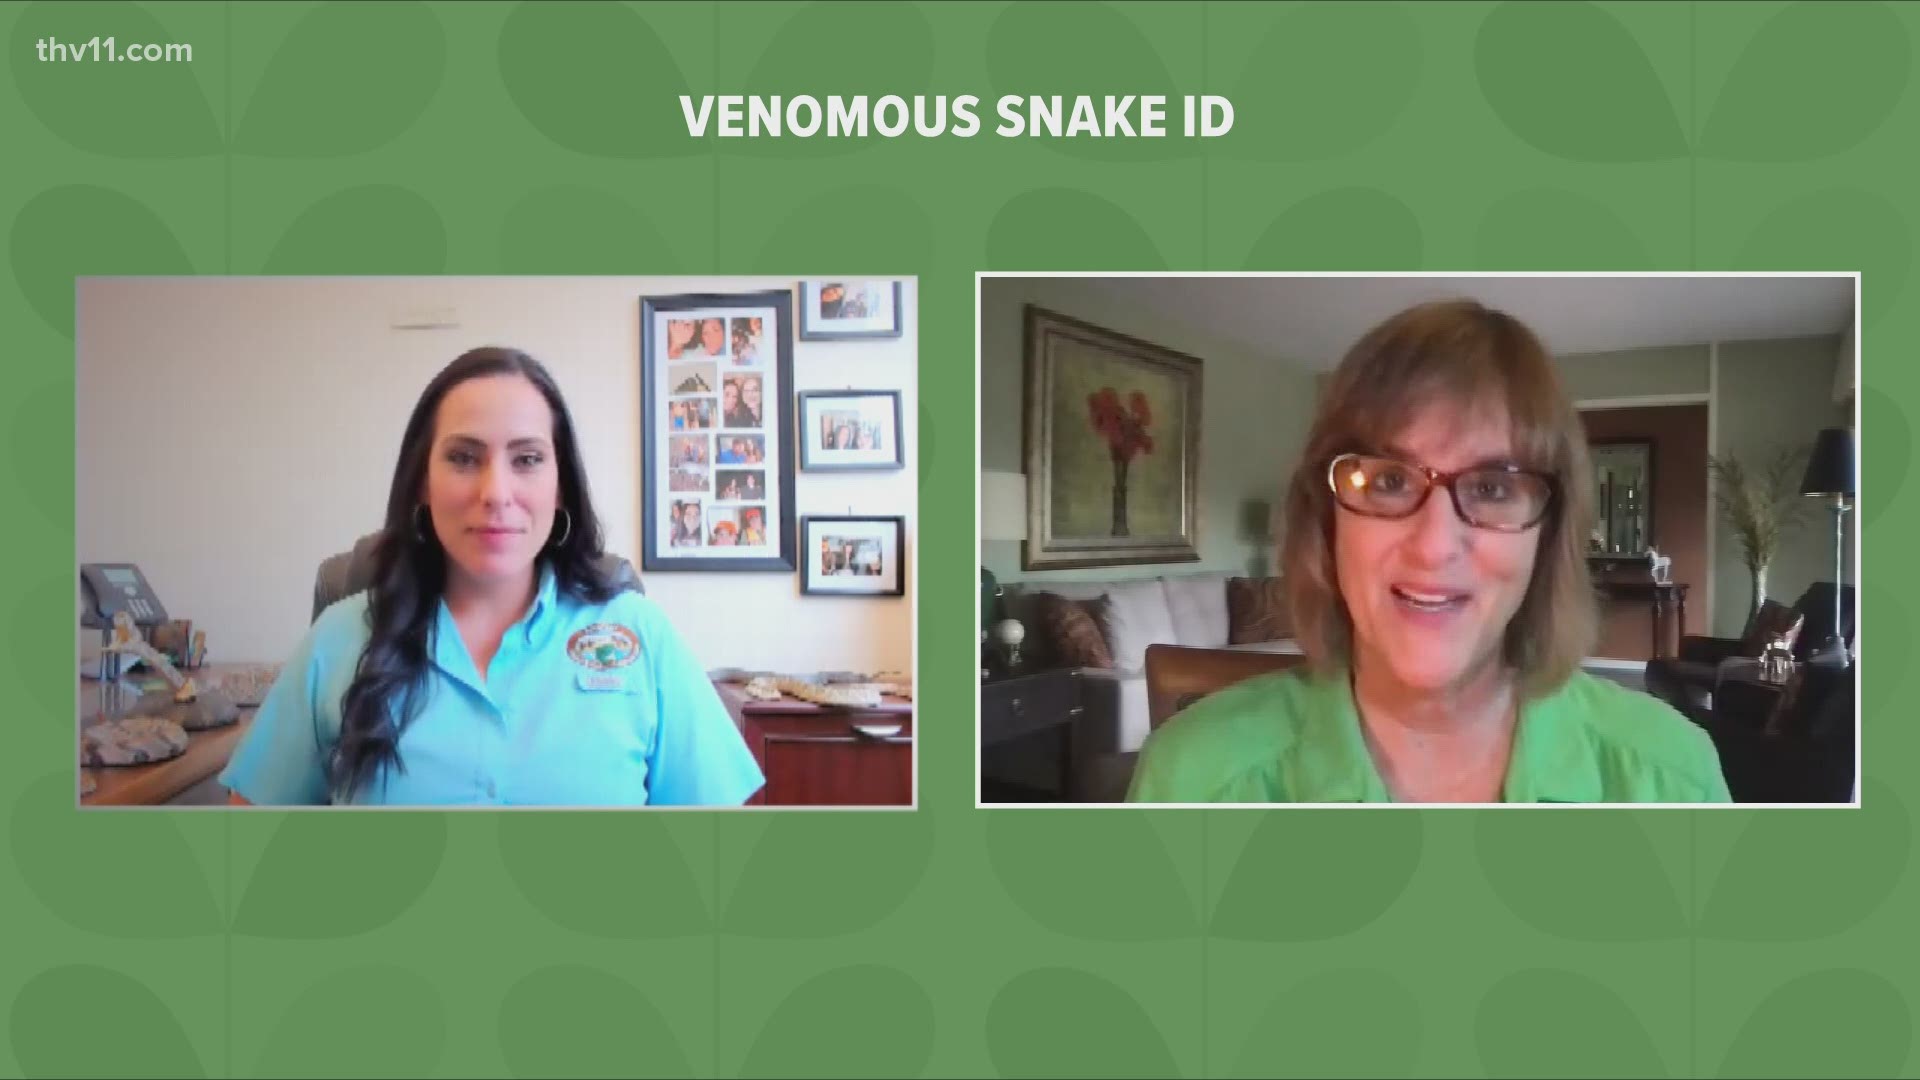 Witt Stephens Jr. Central Arkansas Nature Center is hosting a free virtual program to help people identify venomous snakes in Arkansas.